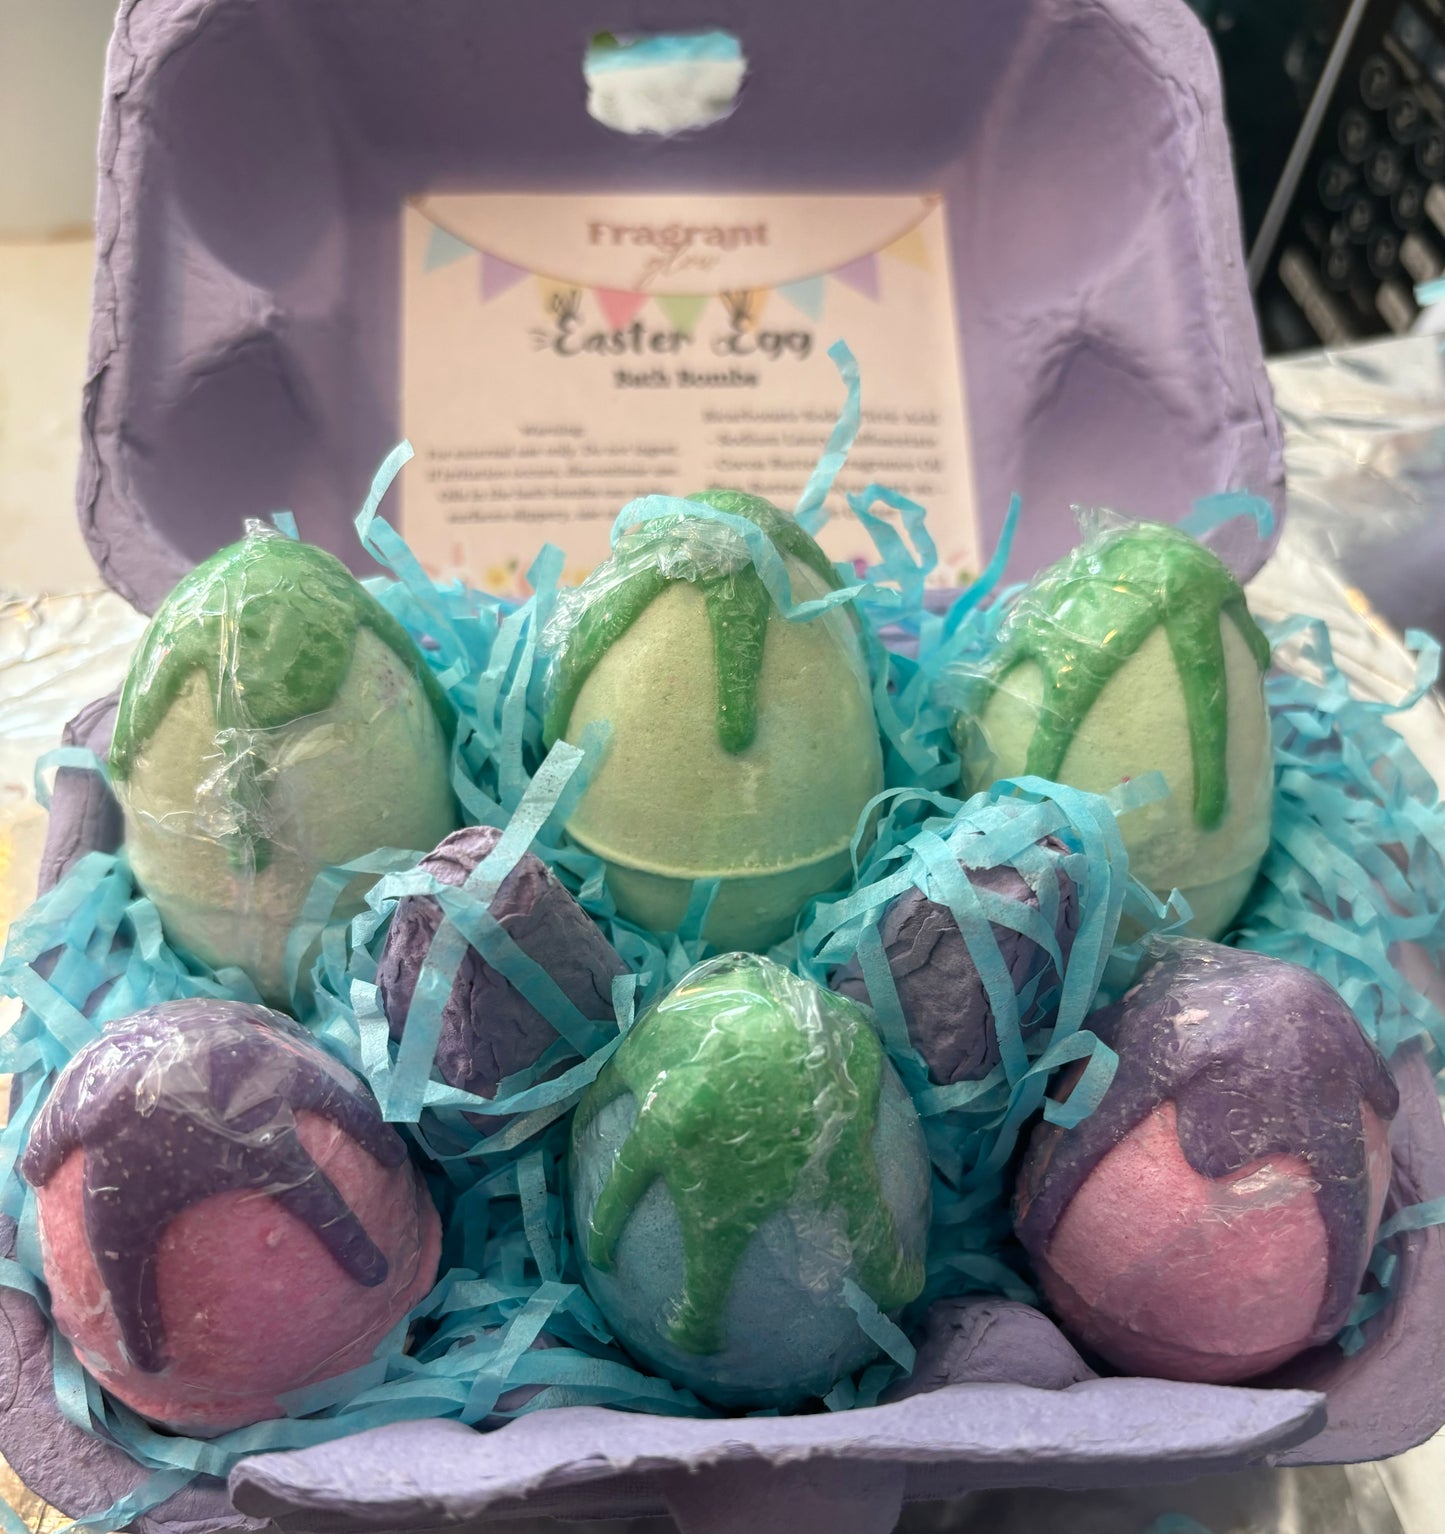 Easter Egg Bath Bomb Pack - Purple Carton